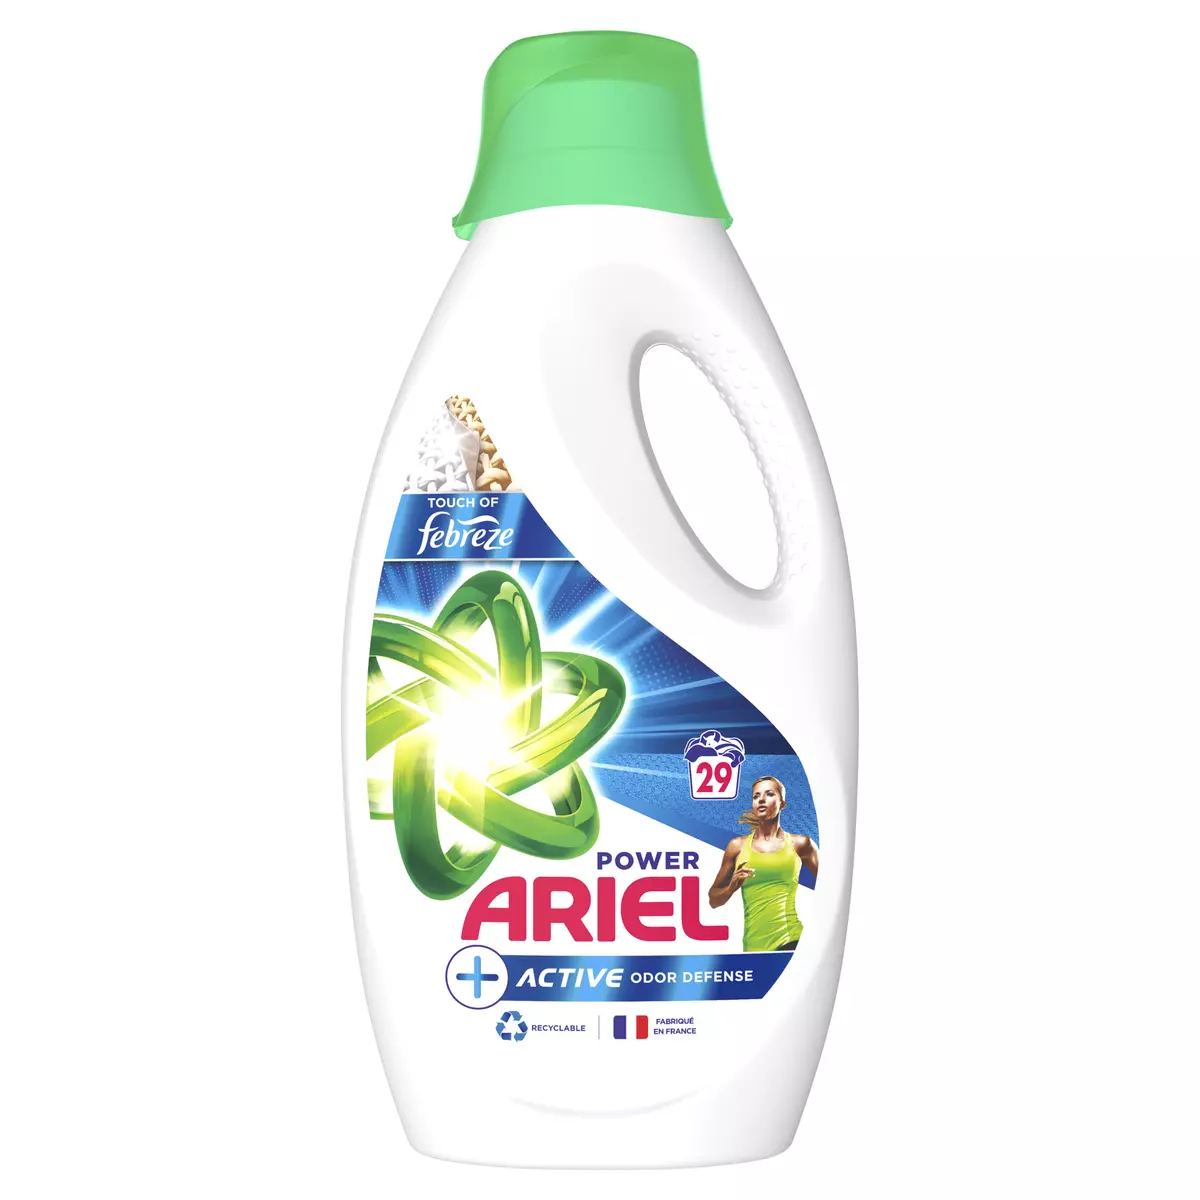 ARIEL Power Lessive liquide odor defense 29 lavages 1.45l